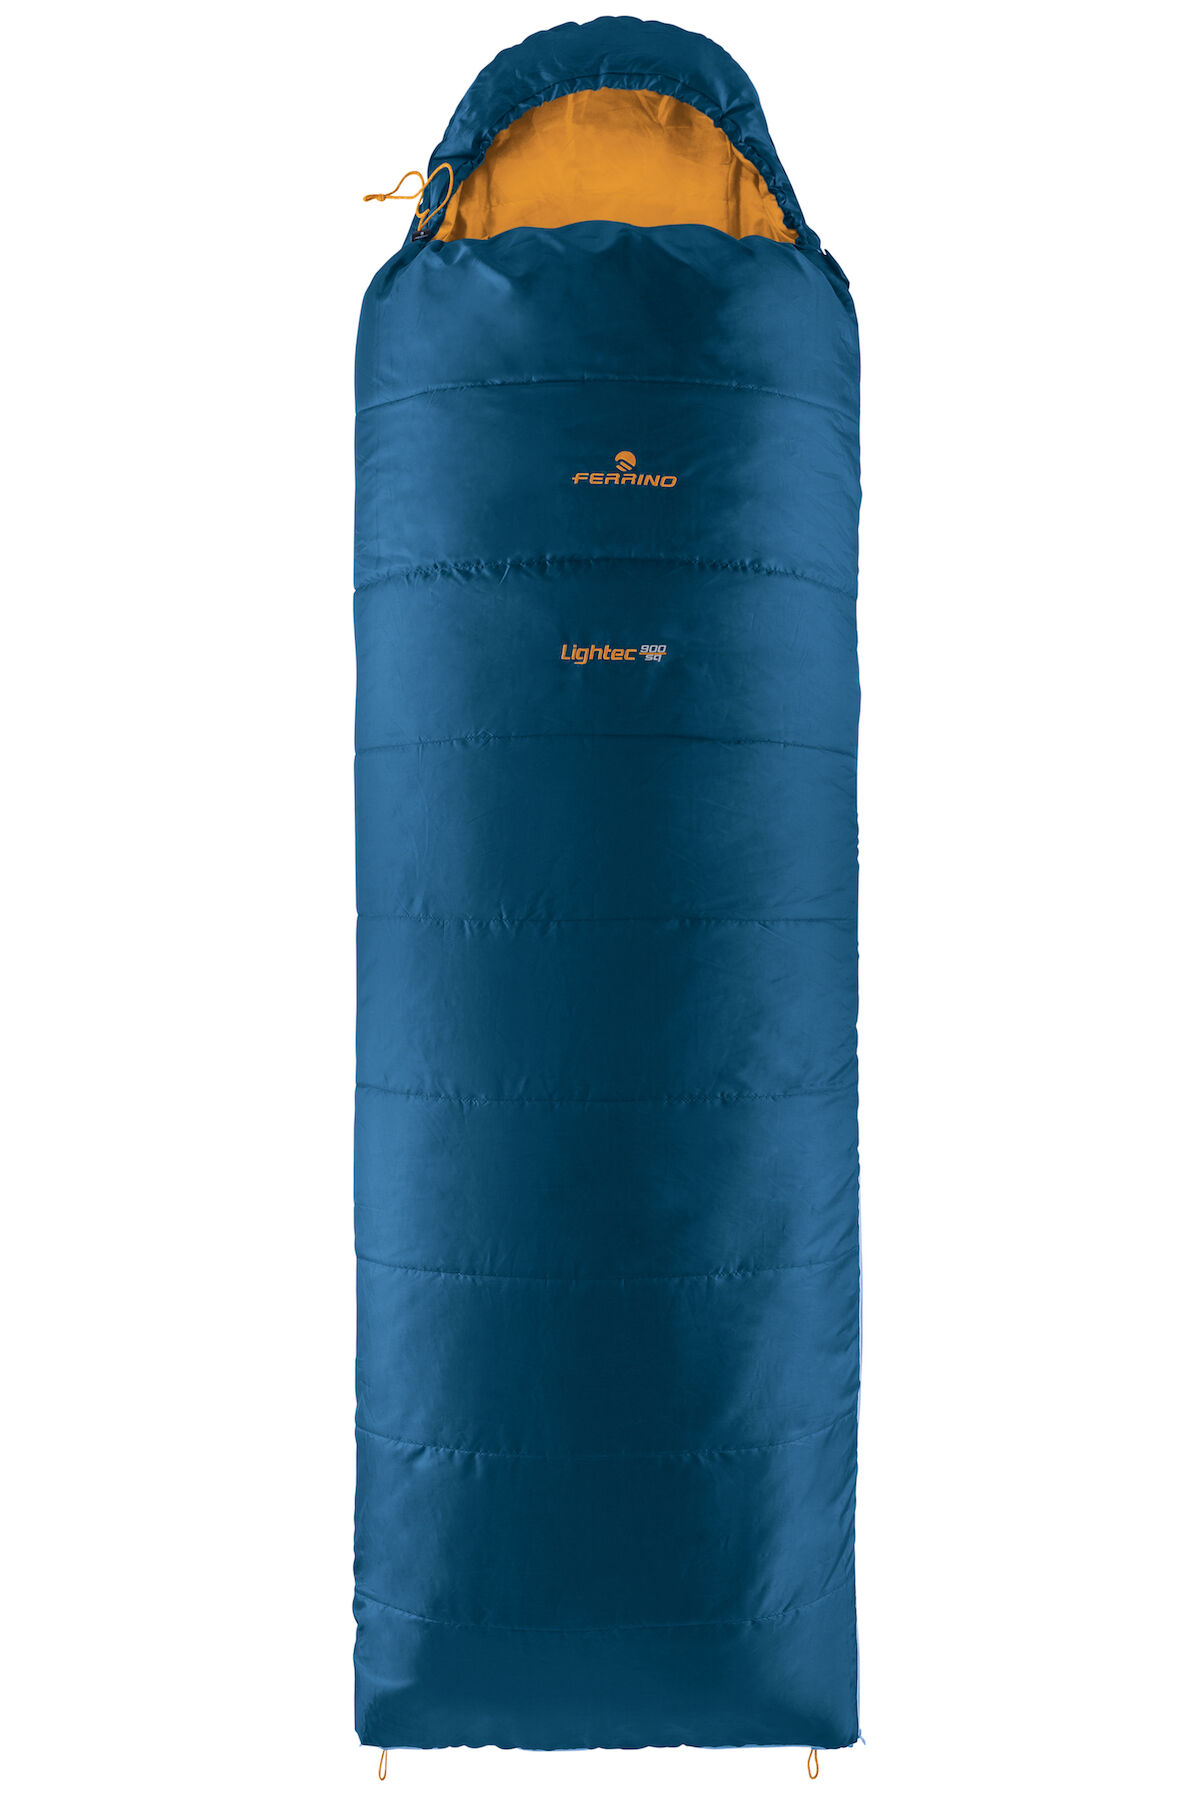 Ferrino Lightech 900 SQ - Sleeping bag